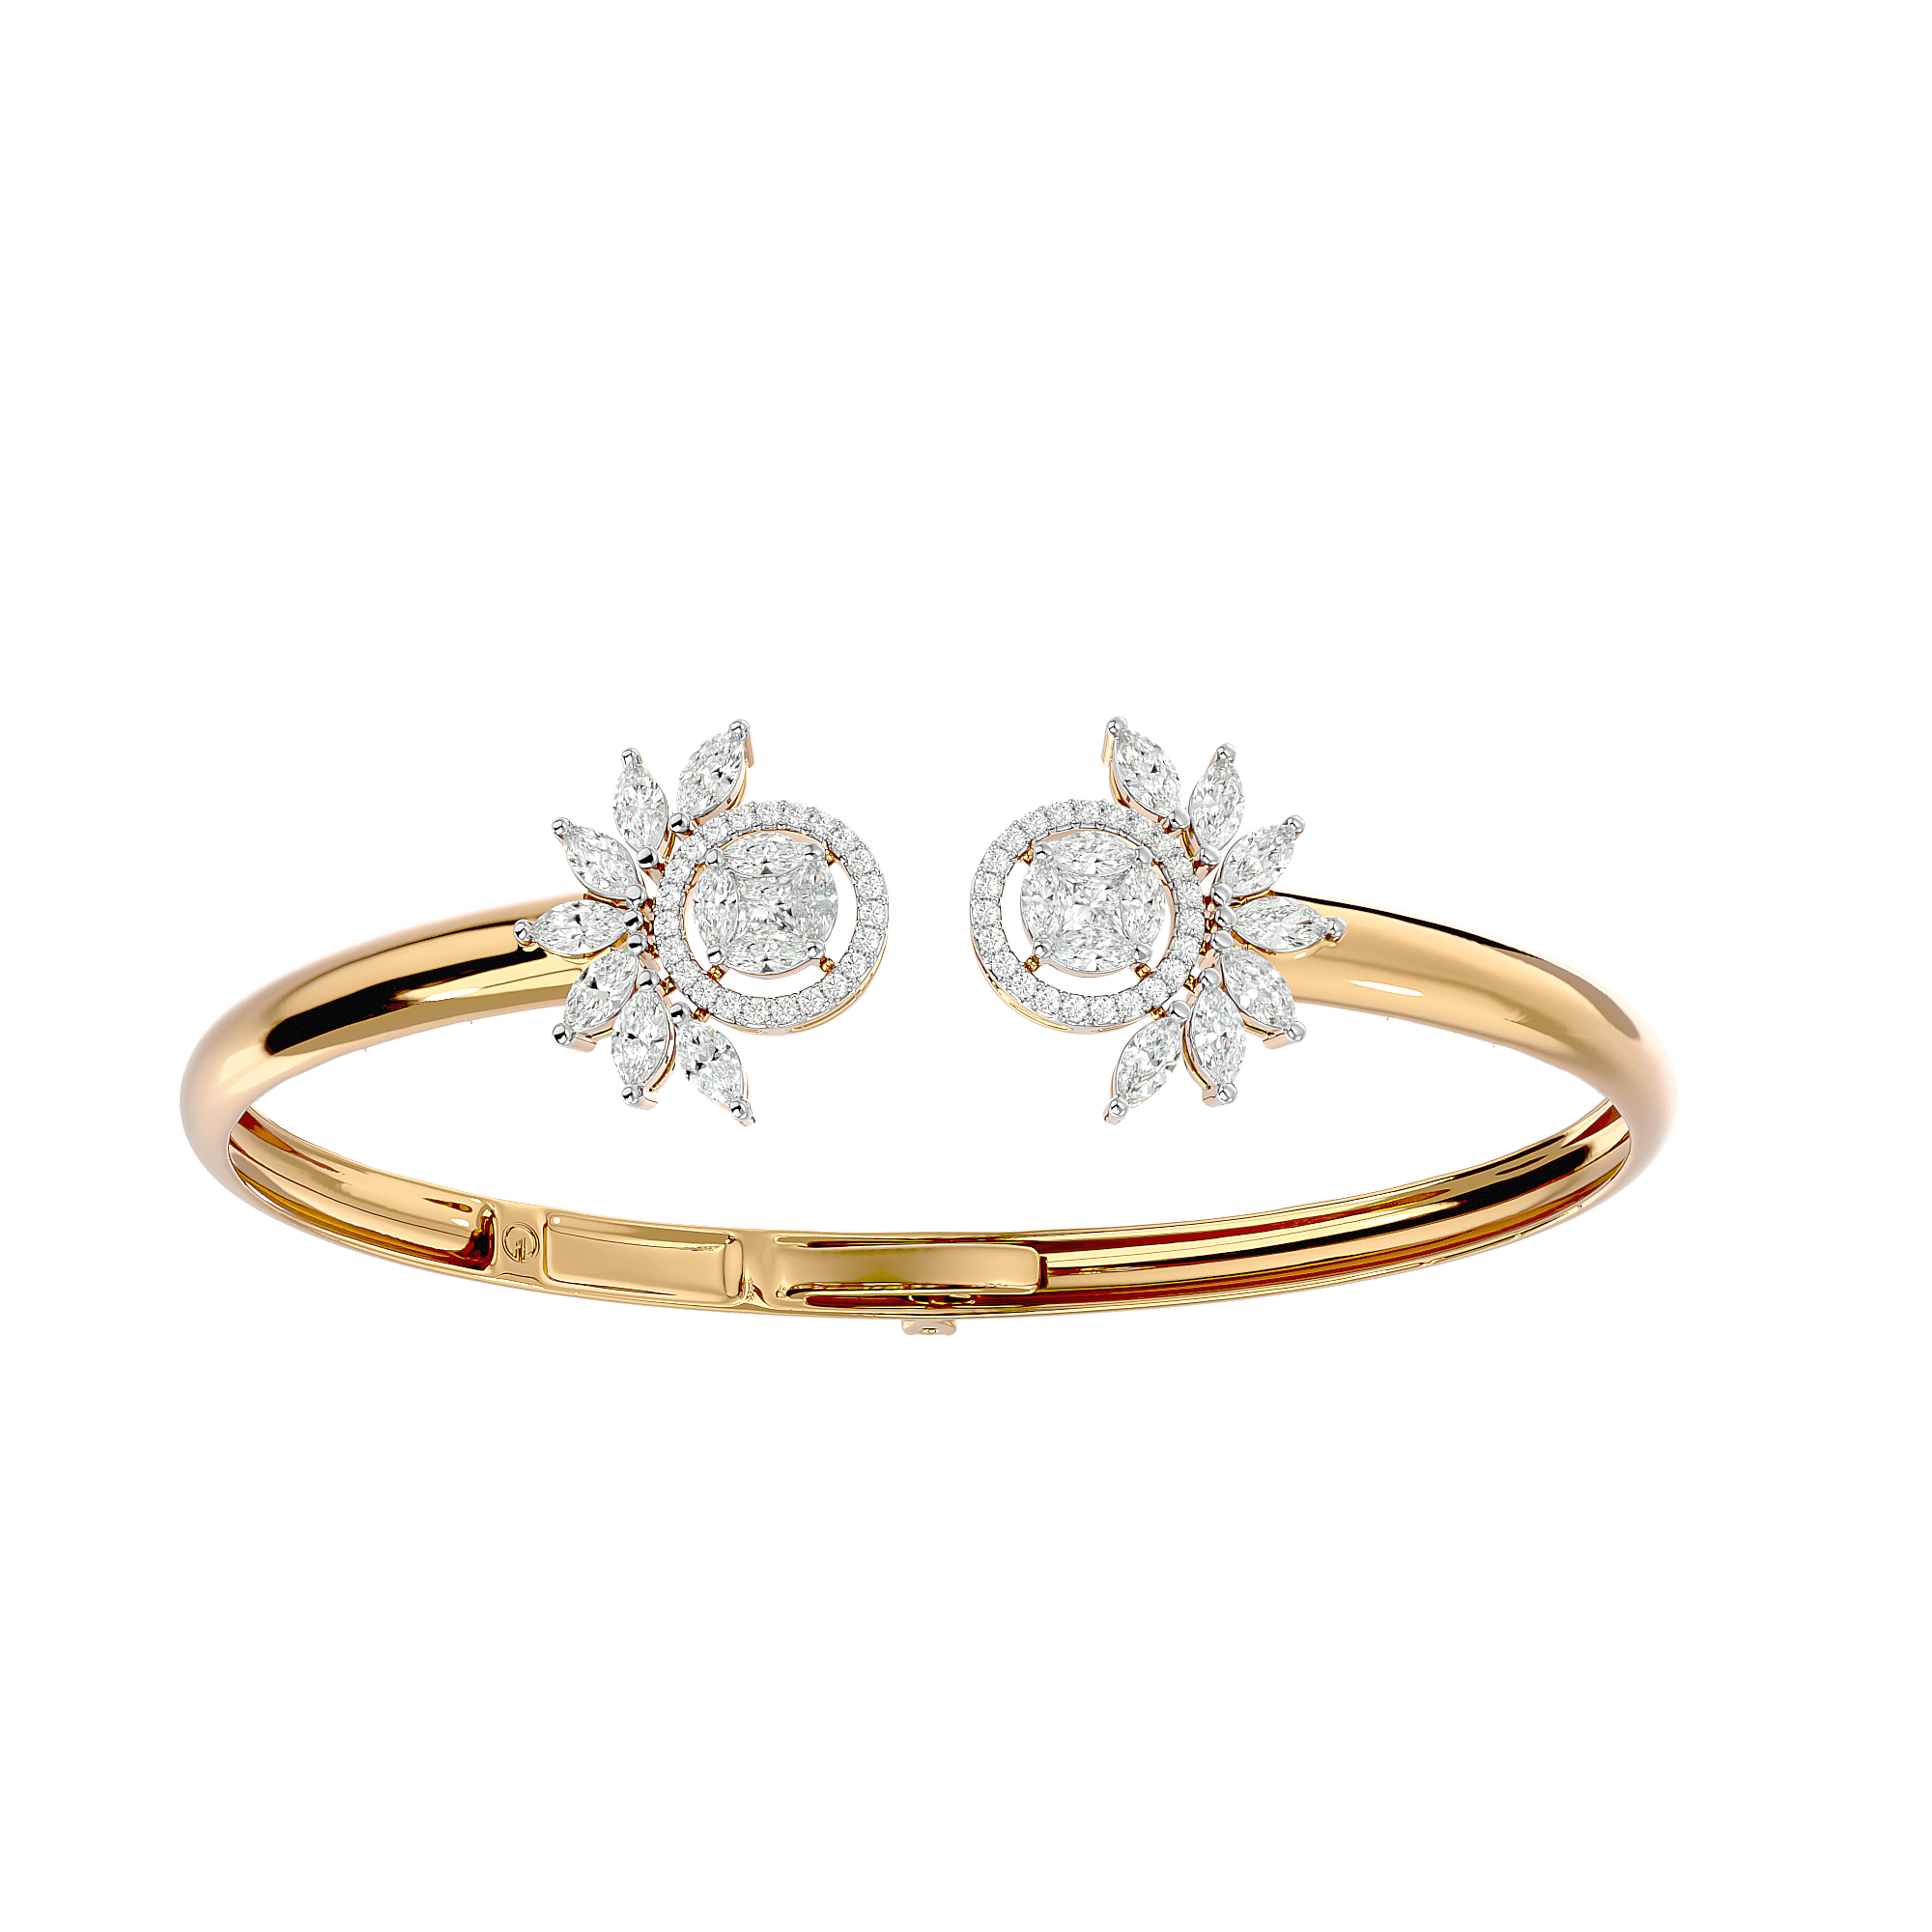 Malabar 22Kt Gold Bangles & Diamond Bangles/Bracelet Designs With Price|  Malabar Gold Bangles Design - YouTube